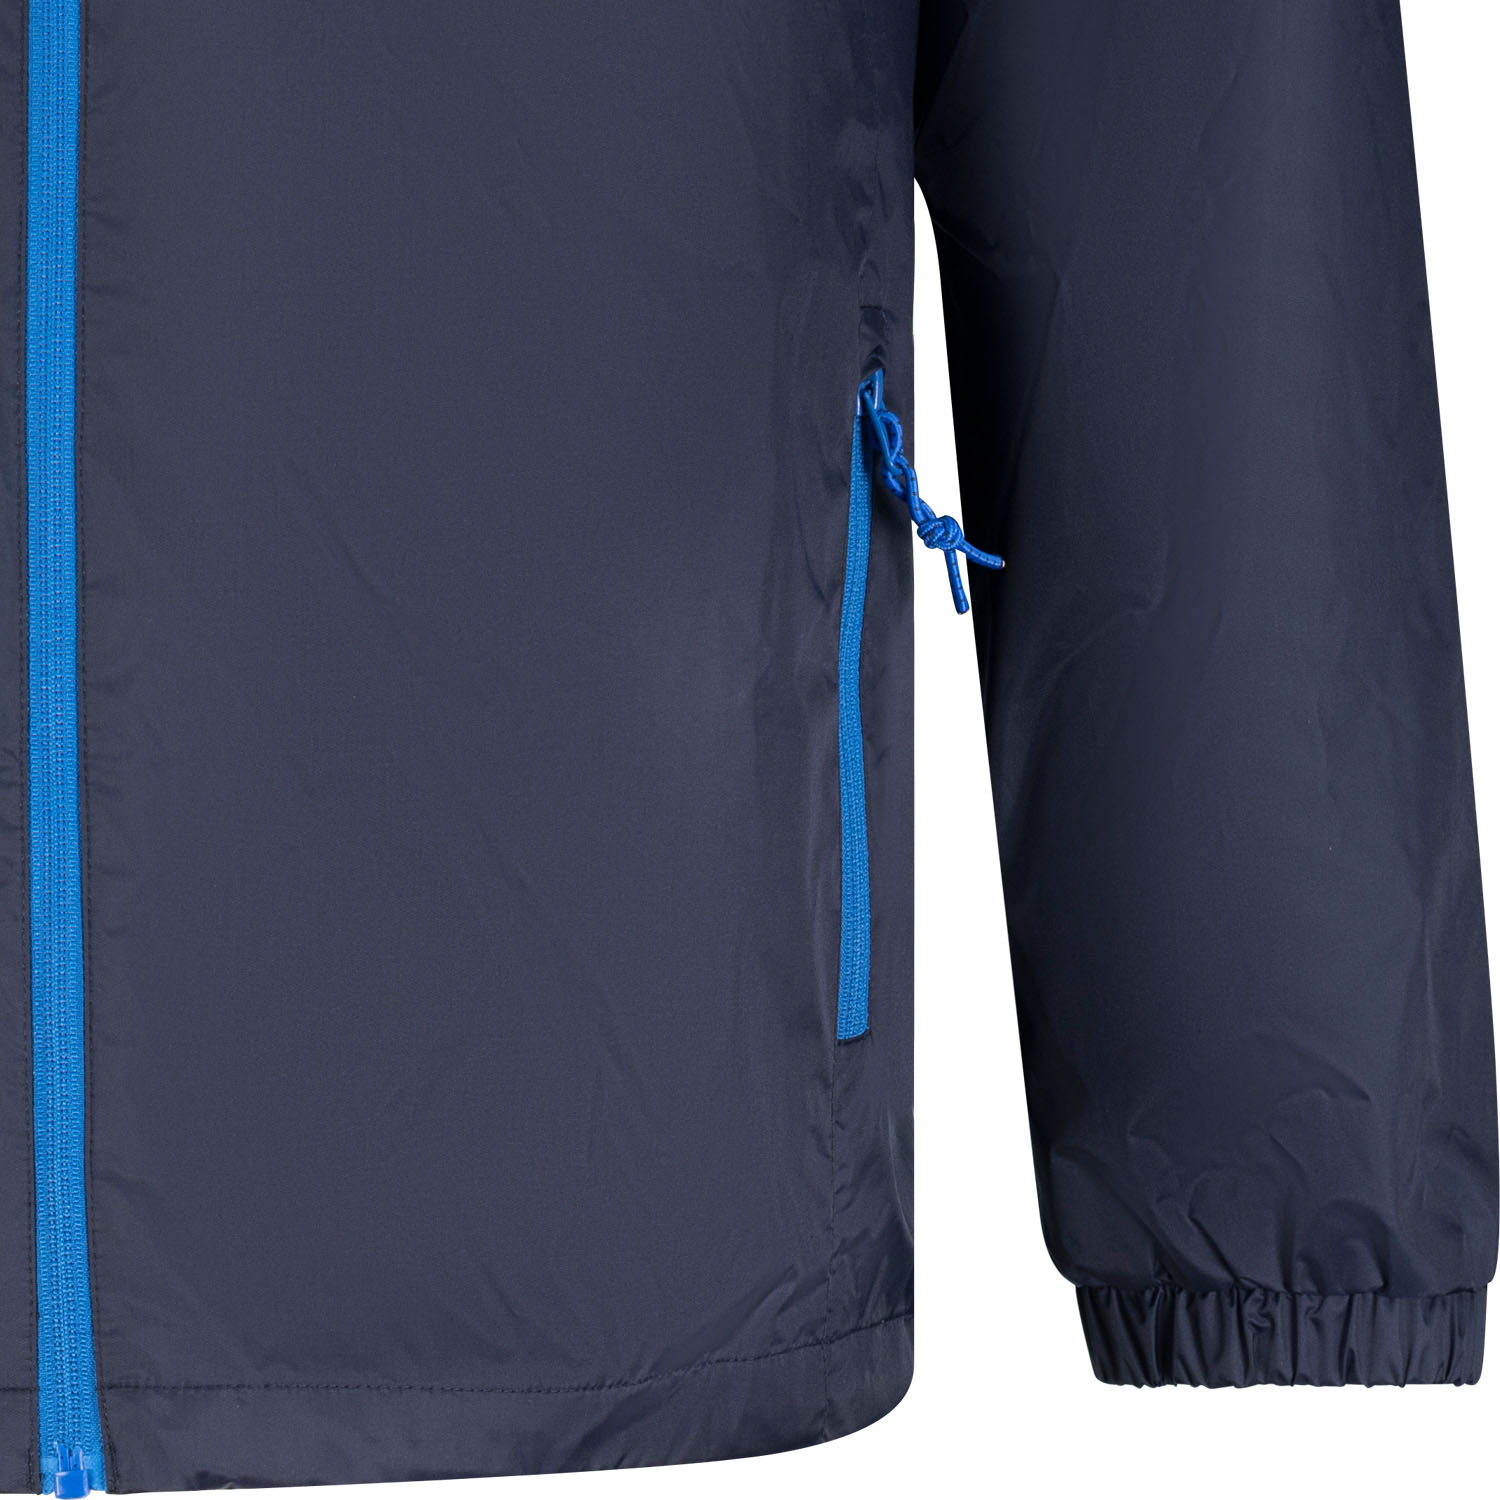 Men's rain jacket navy series London by ADAMO in oversizes up to 12XL